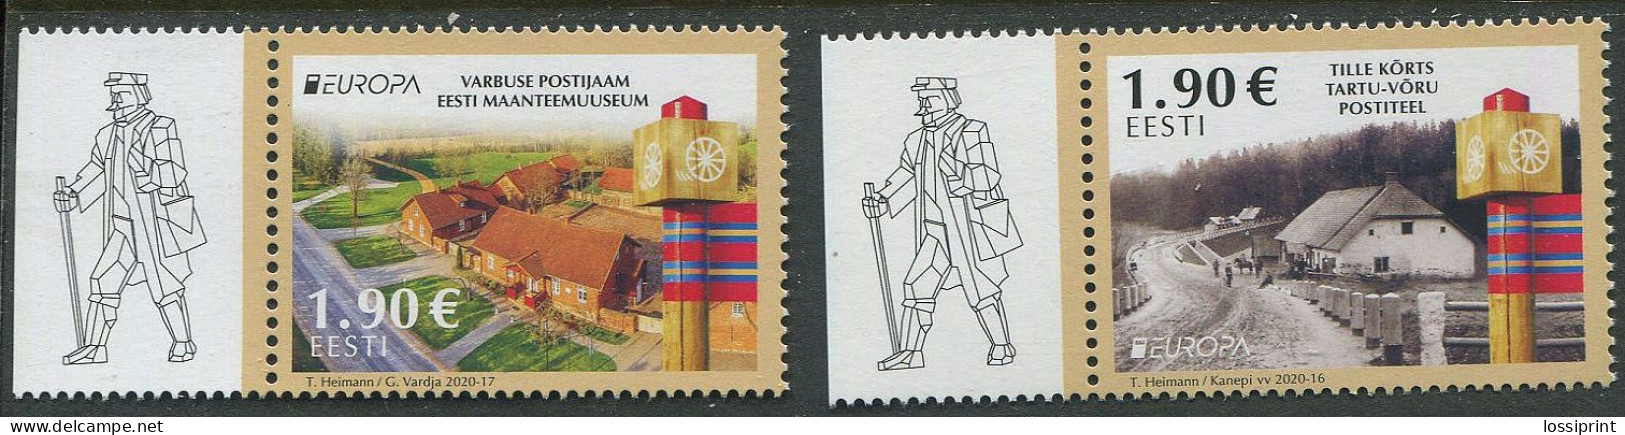 Estonia:Unused Stamps EUROPA Cept 2020, Postal Roads, Post, MNH - Estonia